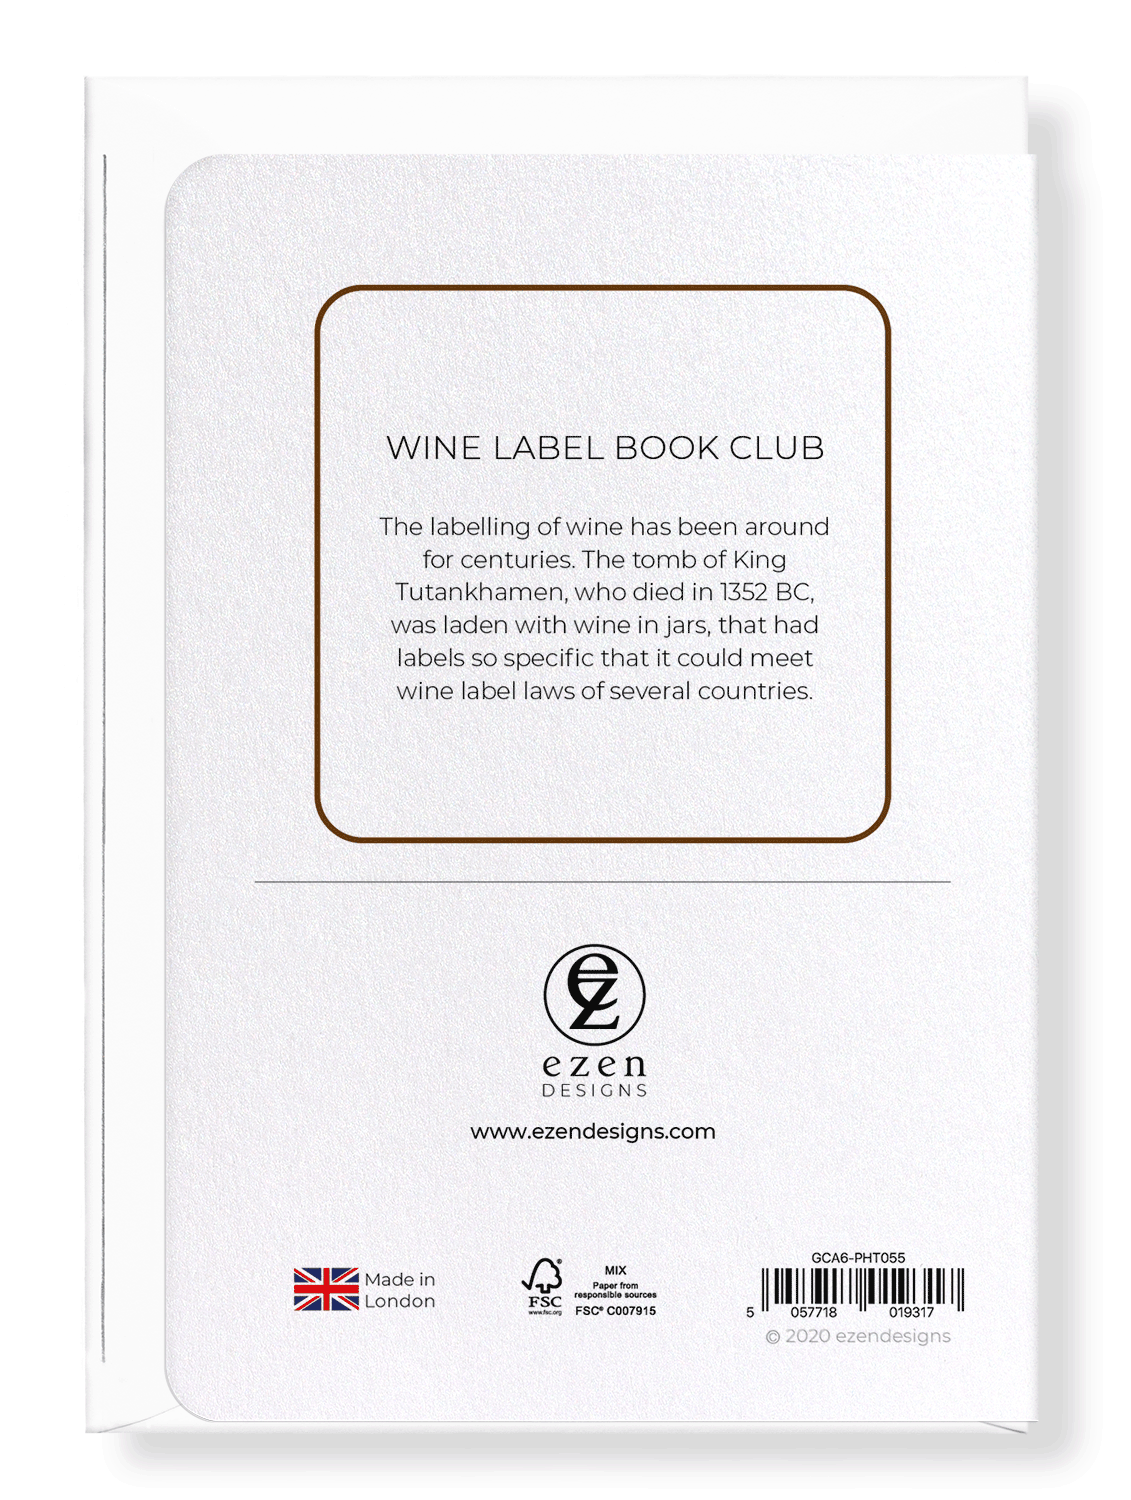 Ezen Designs - Wine label book club - Greeting Card - Back